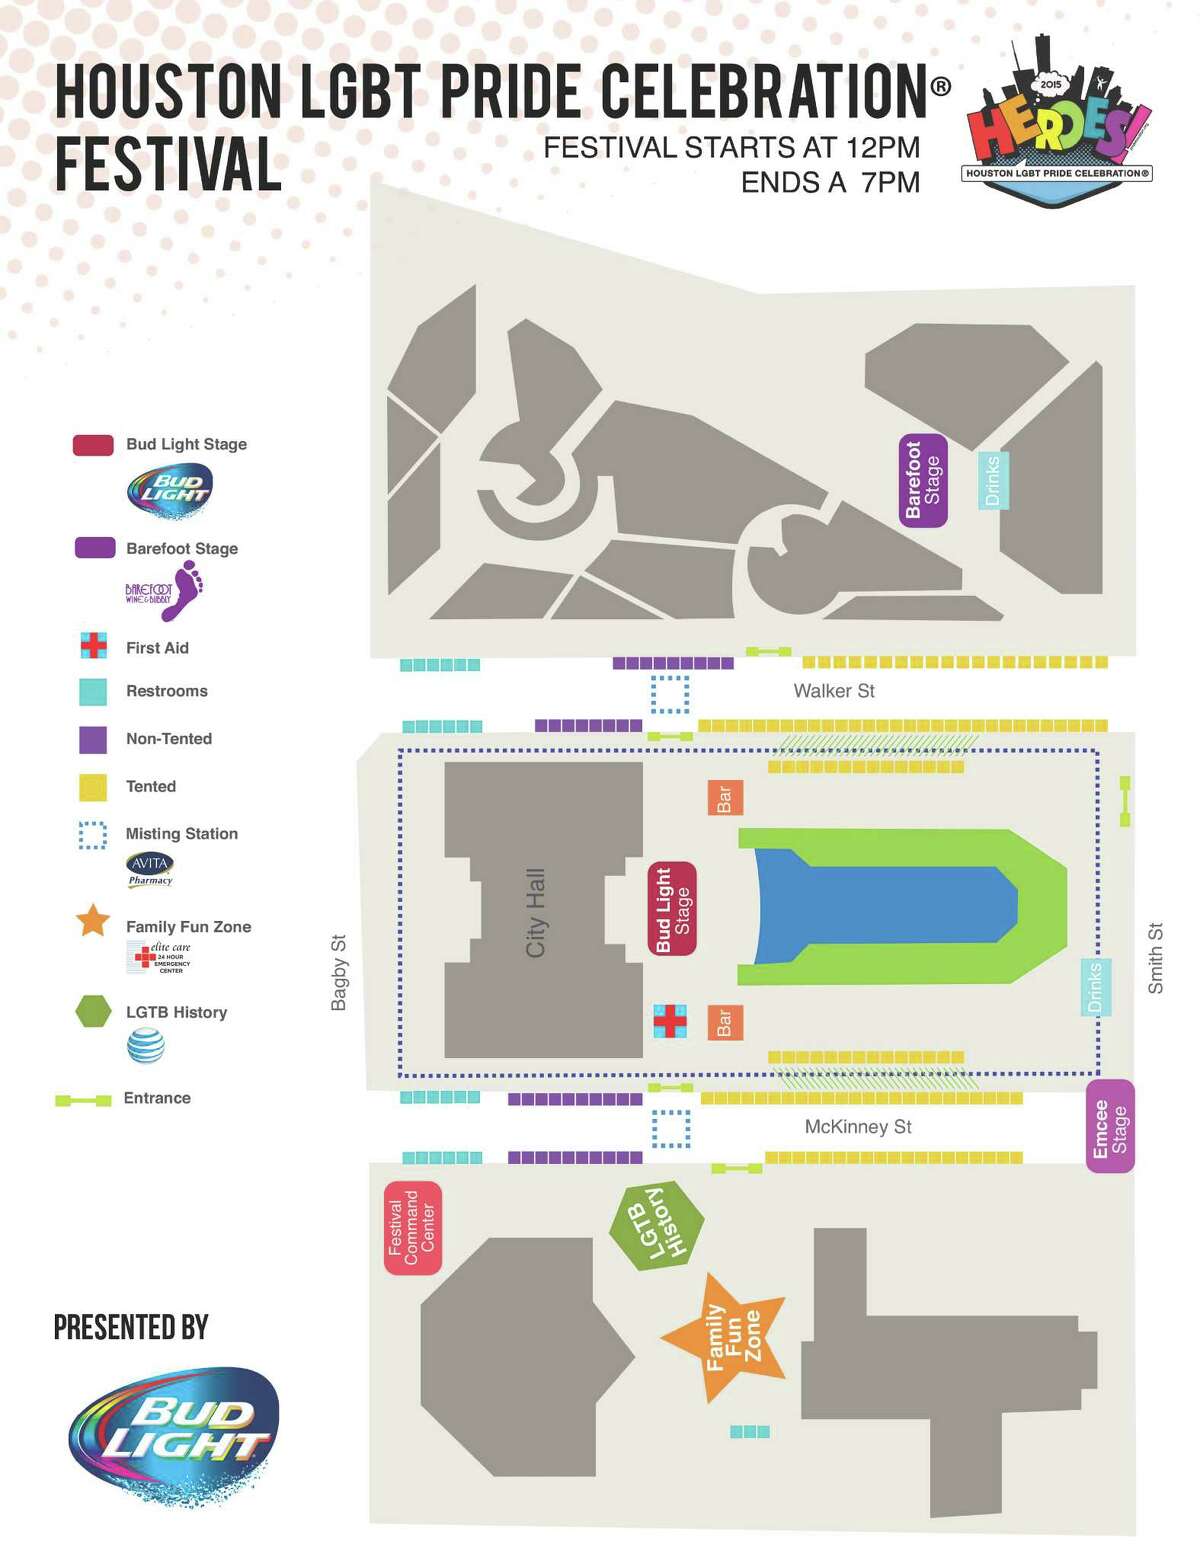 Pride Houston 2015 festival location and map.